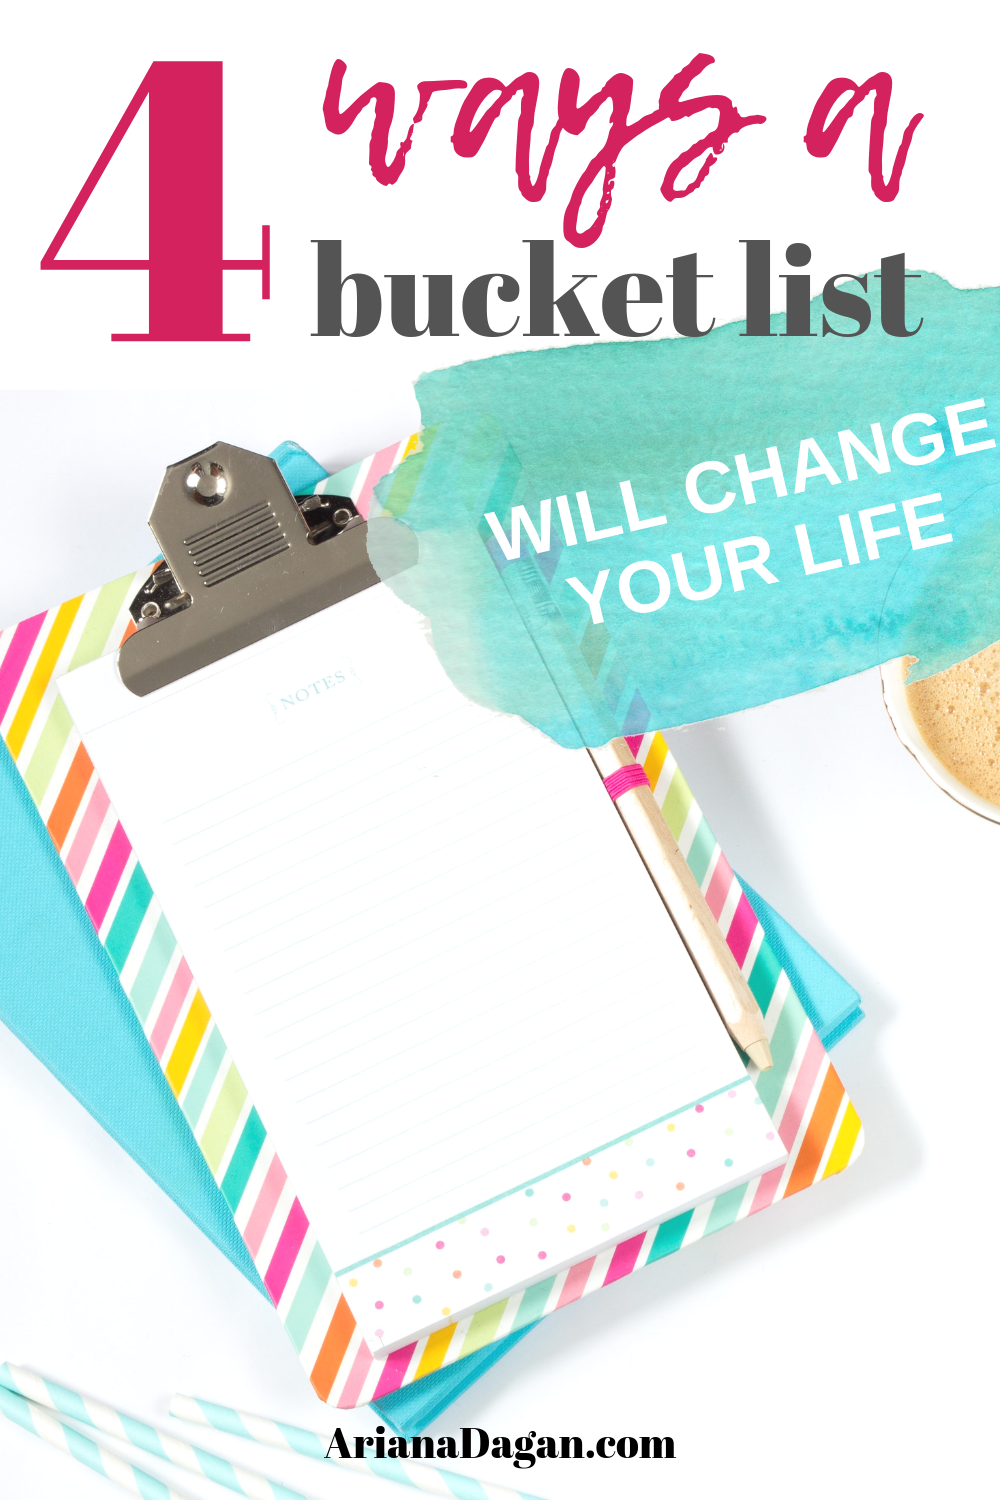 4 Ways a Bucket List Will Change Your Life by Ariana Dagan